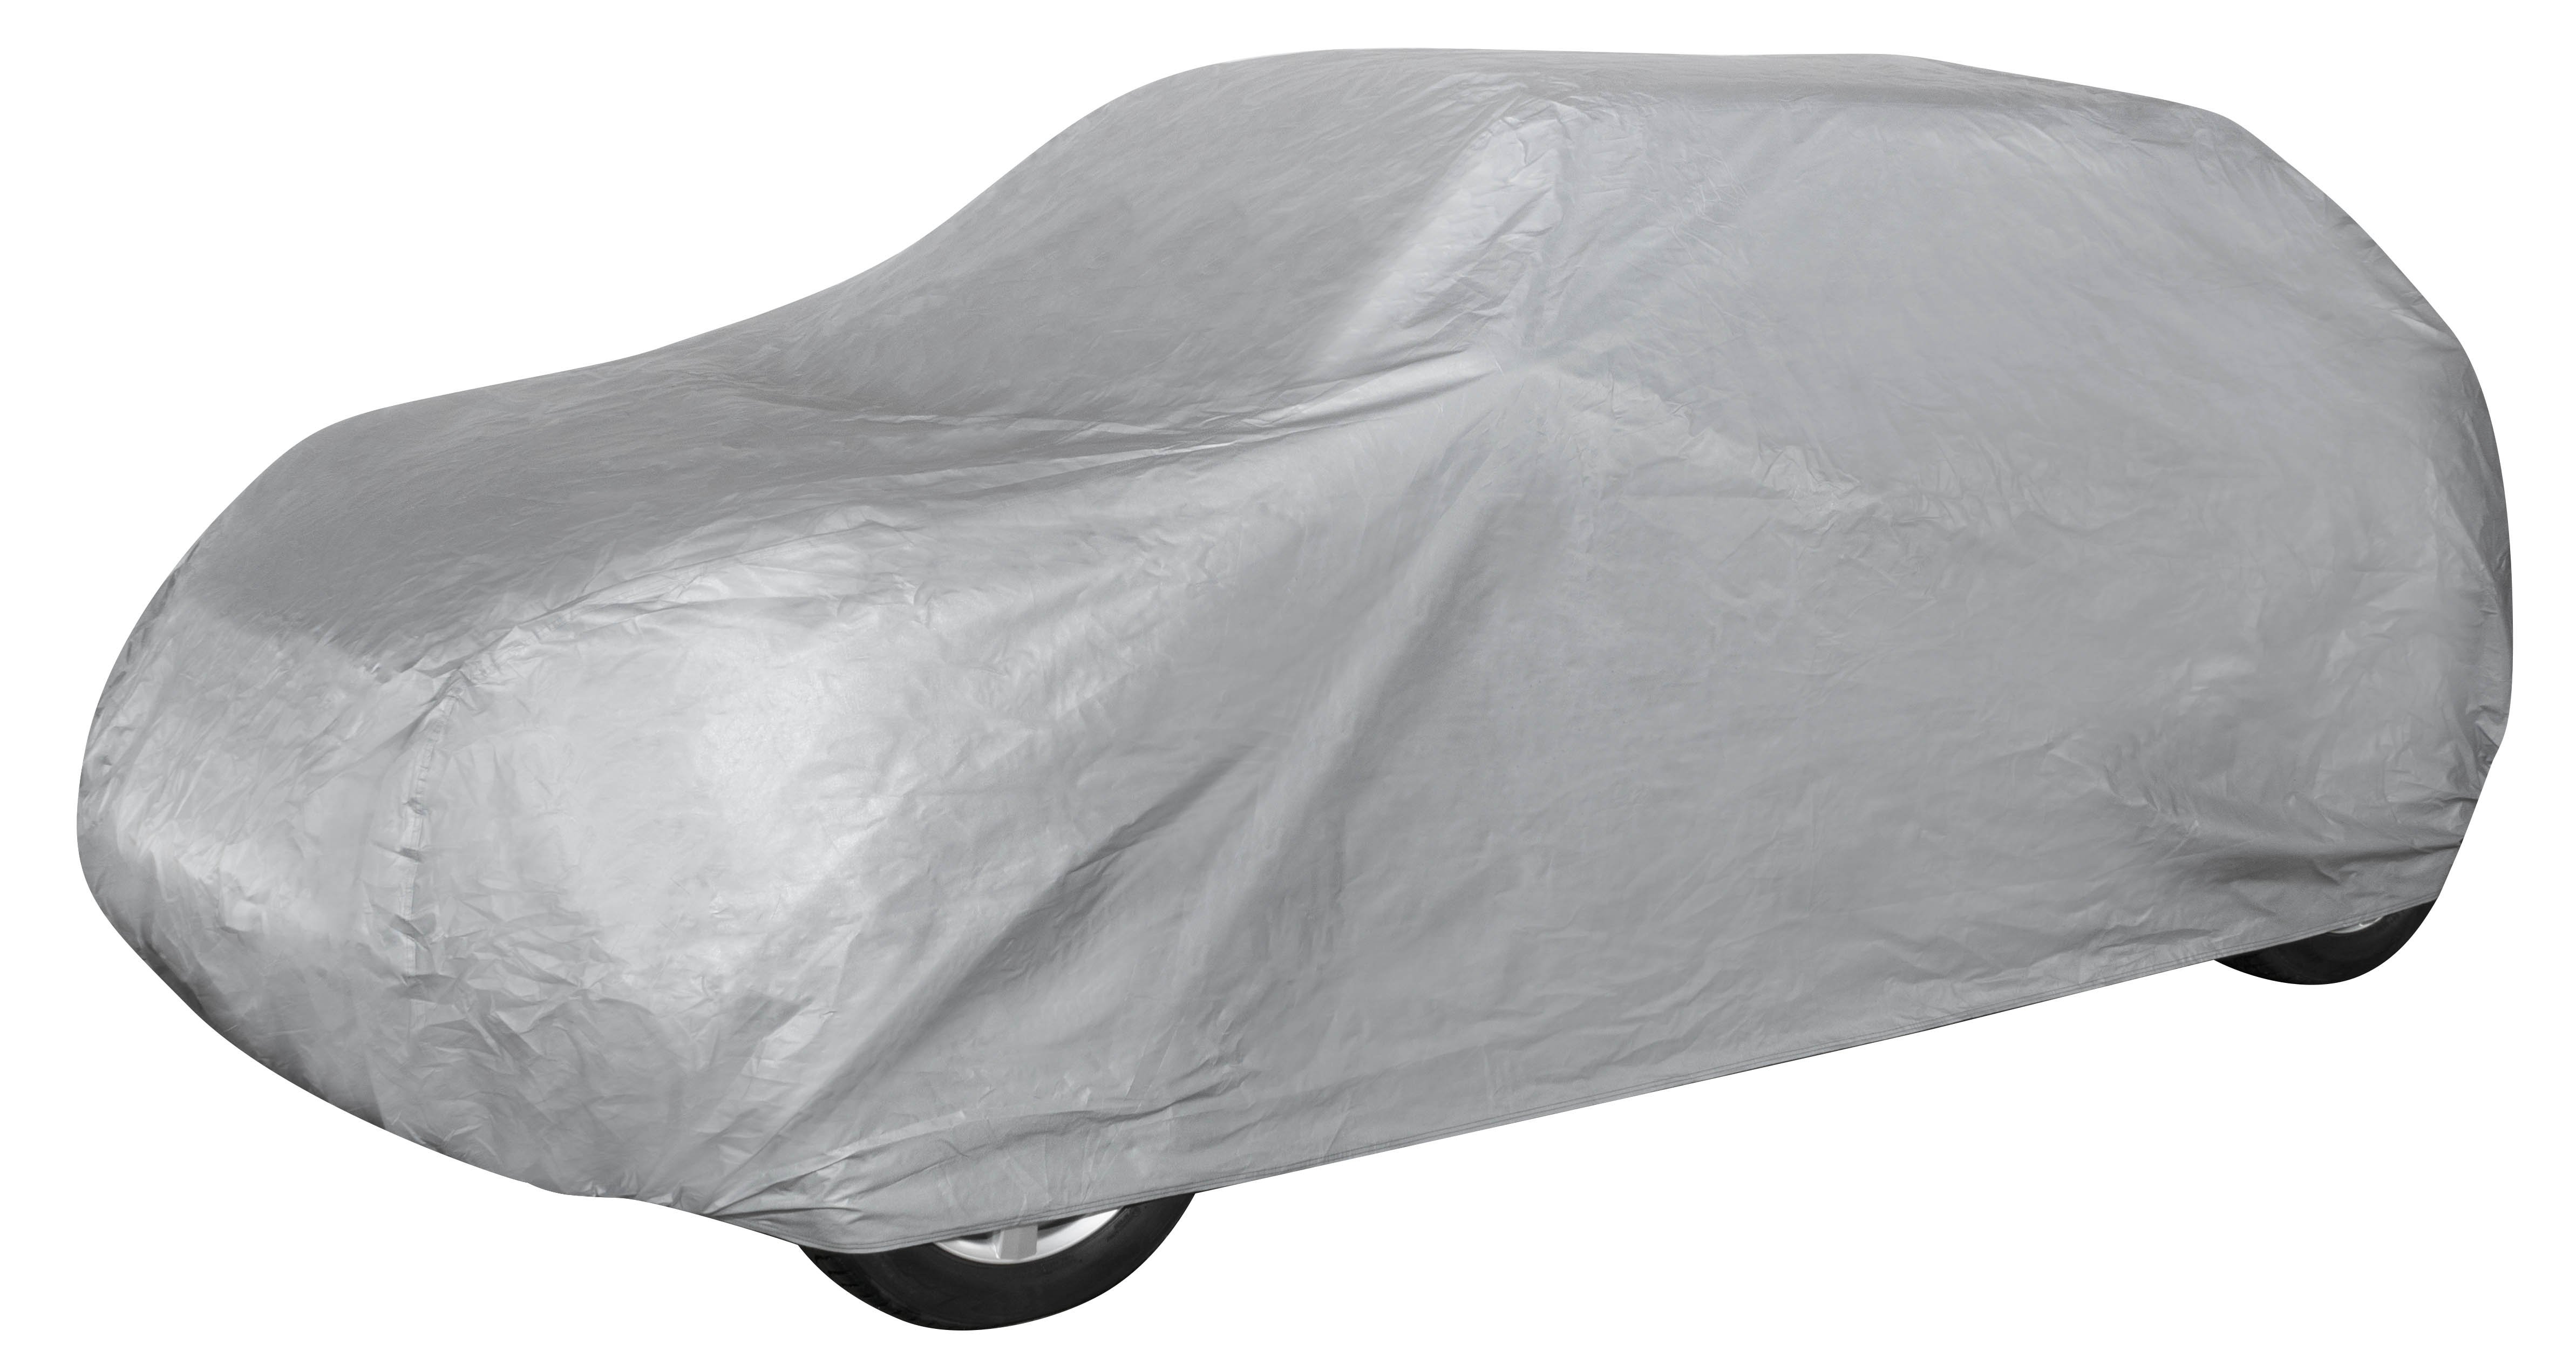 Autoafdekking AllWeather SUV maat S lichtgrijs, waterdichte autohoes, stofdicht met UV-bescherming, verstevigde gordelsluiting